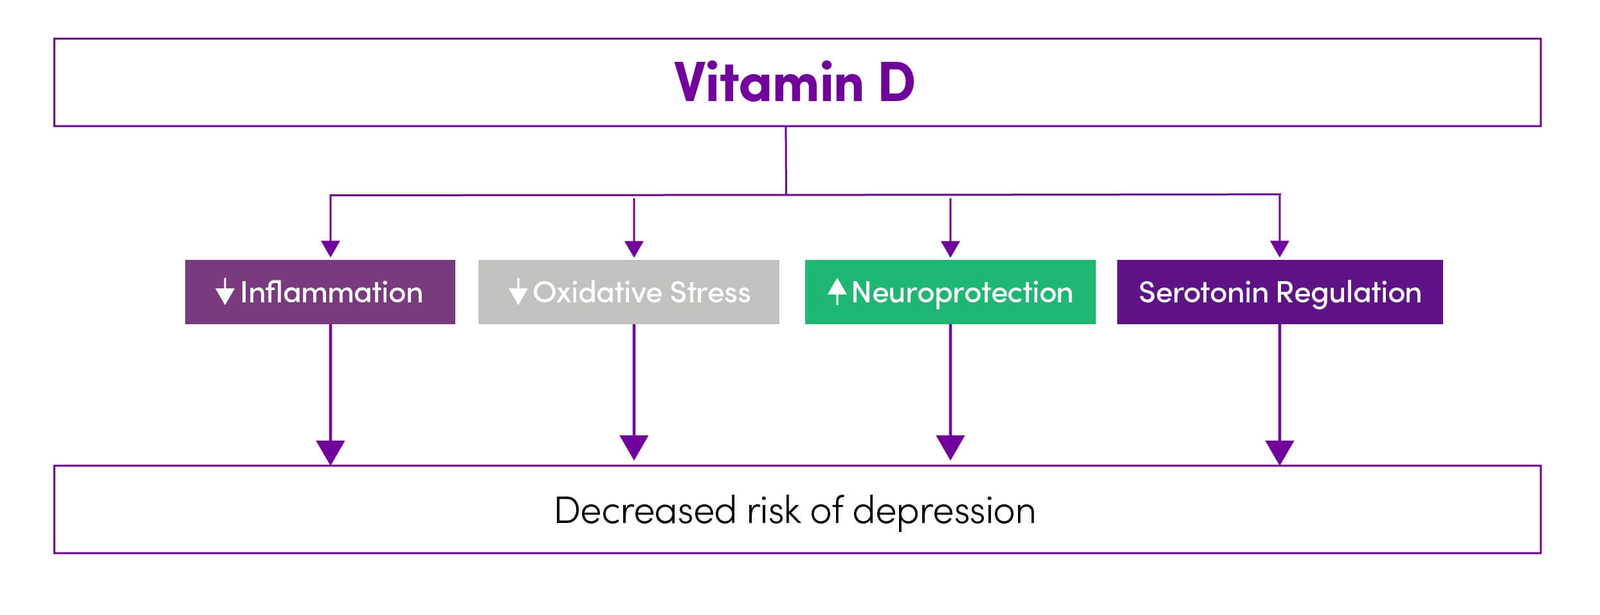 Vitamin D and Depression Enhanced Fig 2